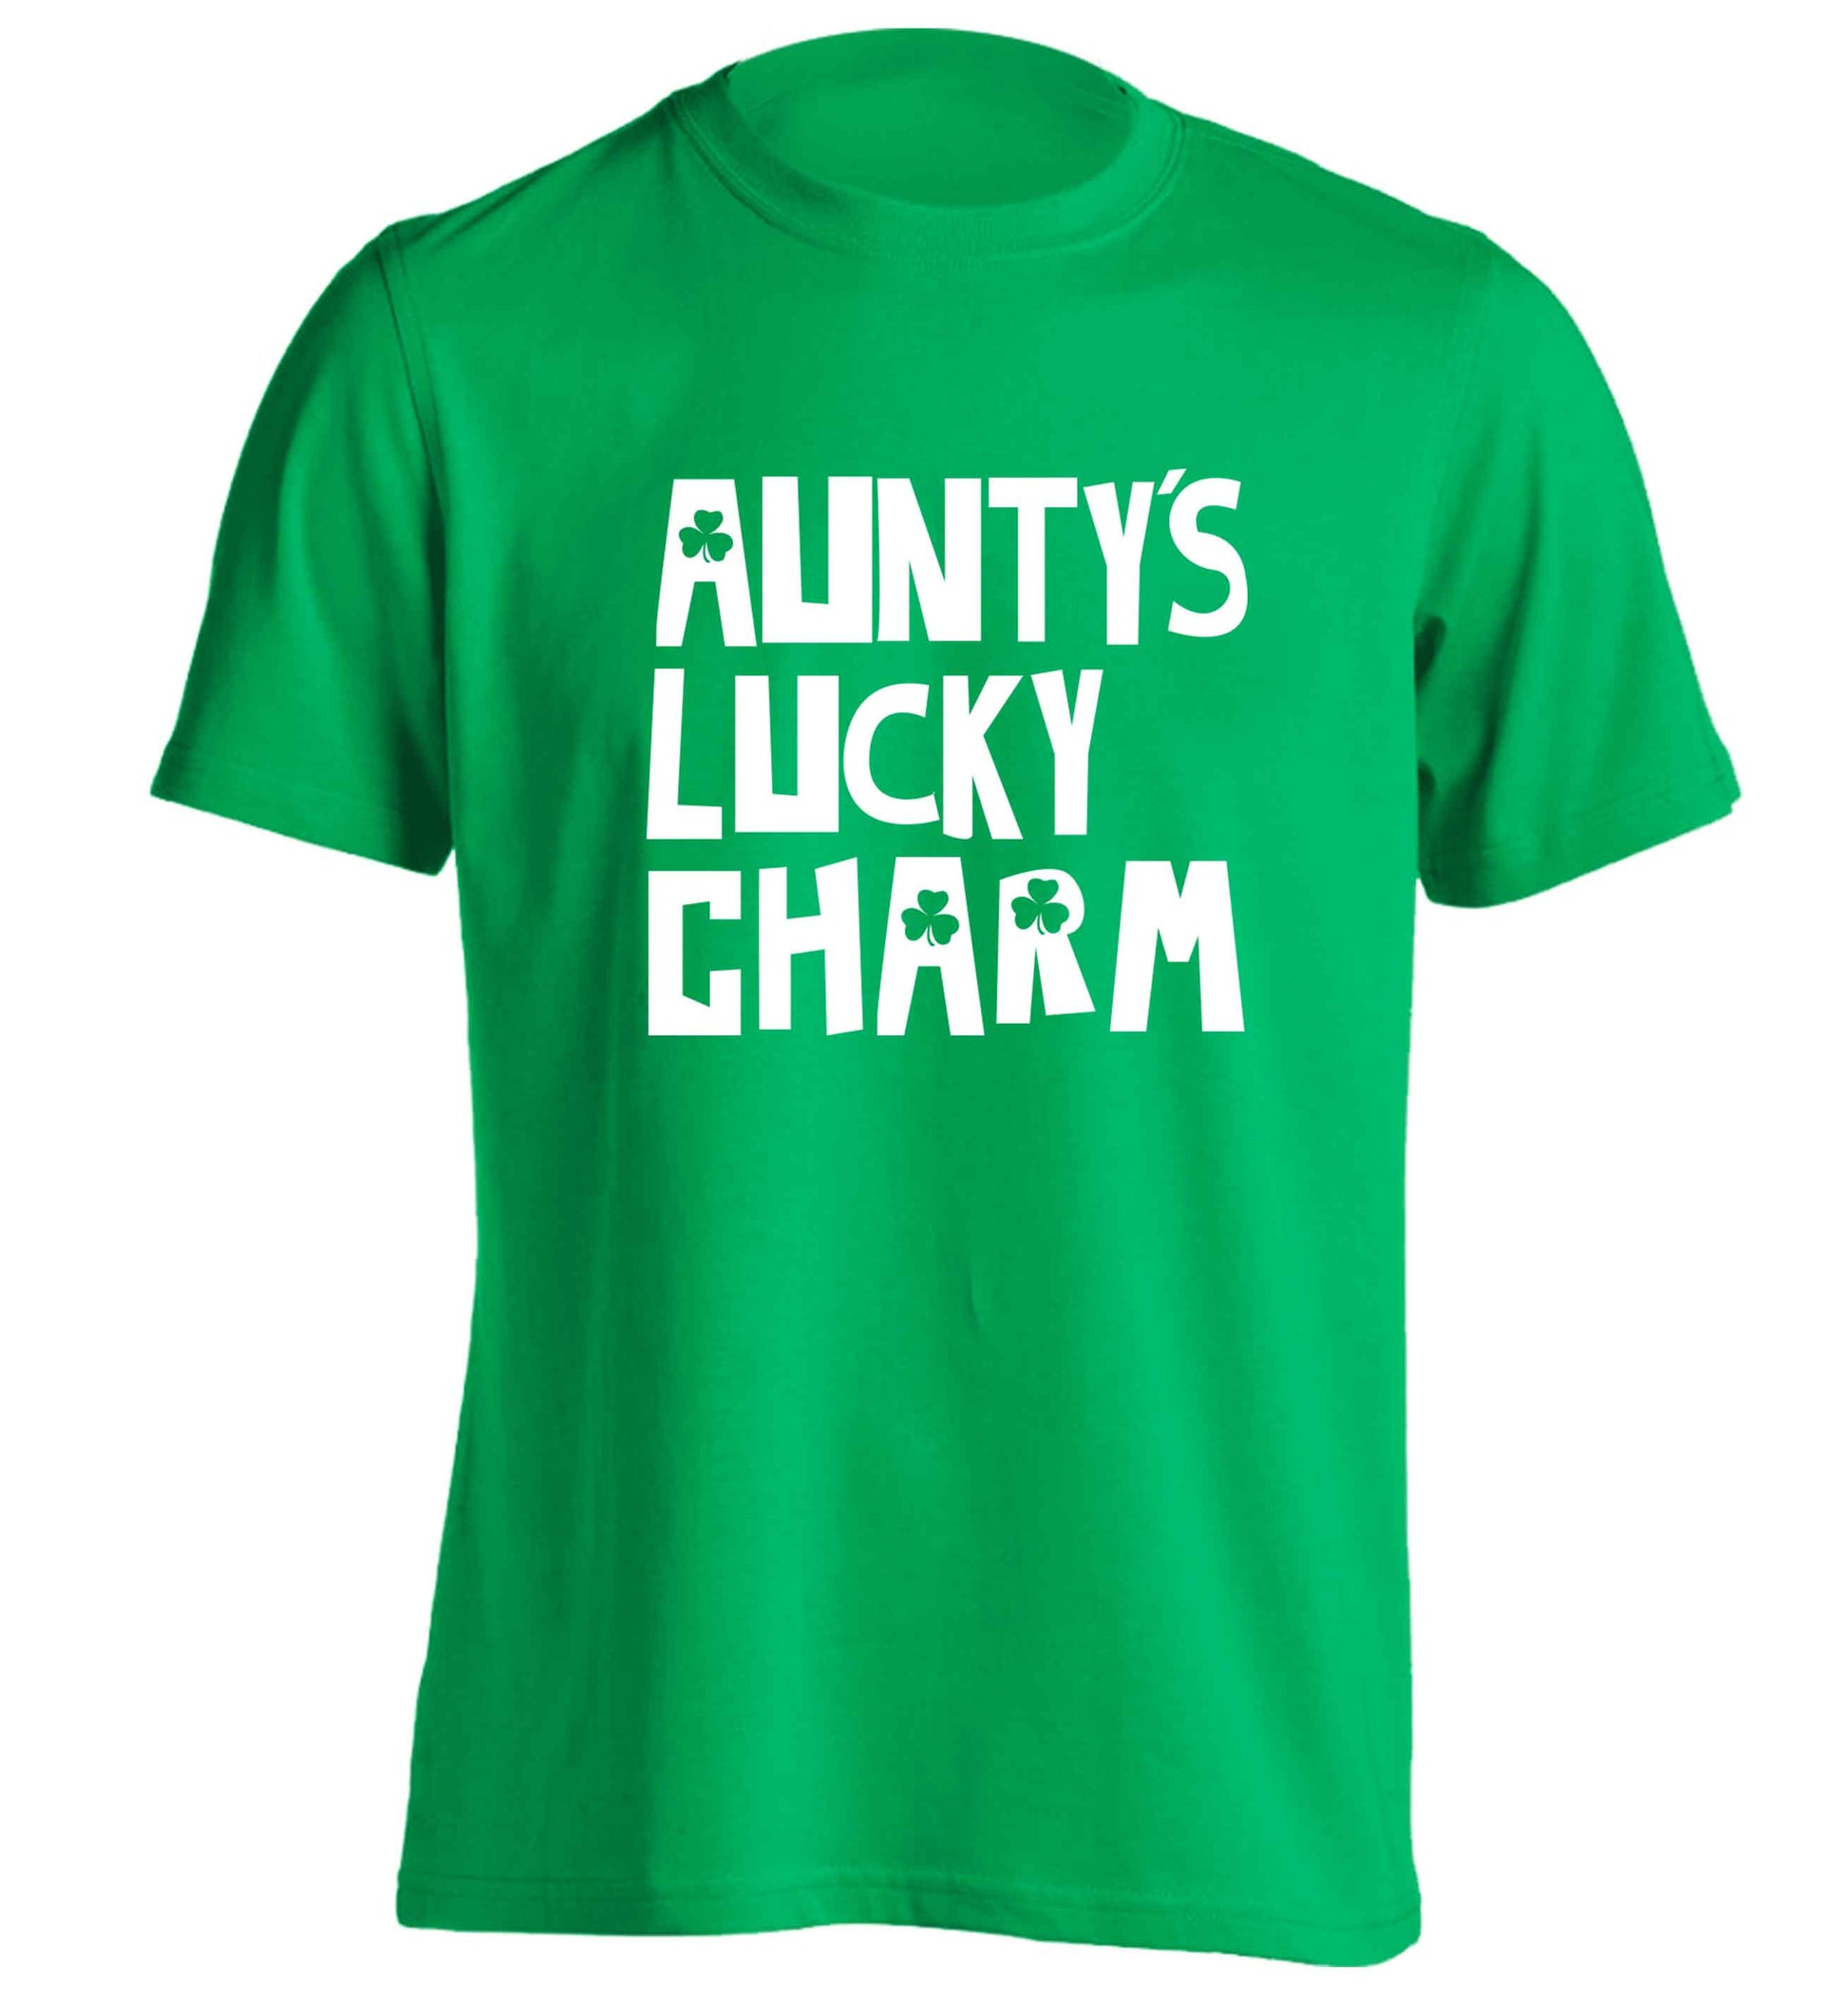 Aunty's lucky charm adults unisex green Tshirt 2XL